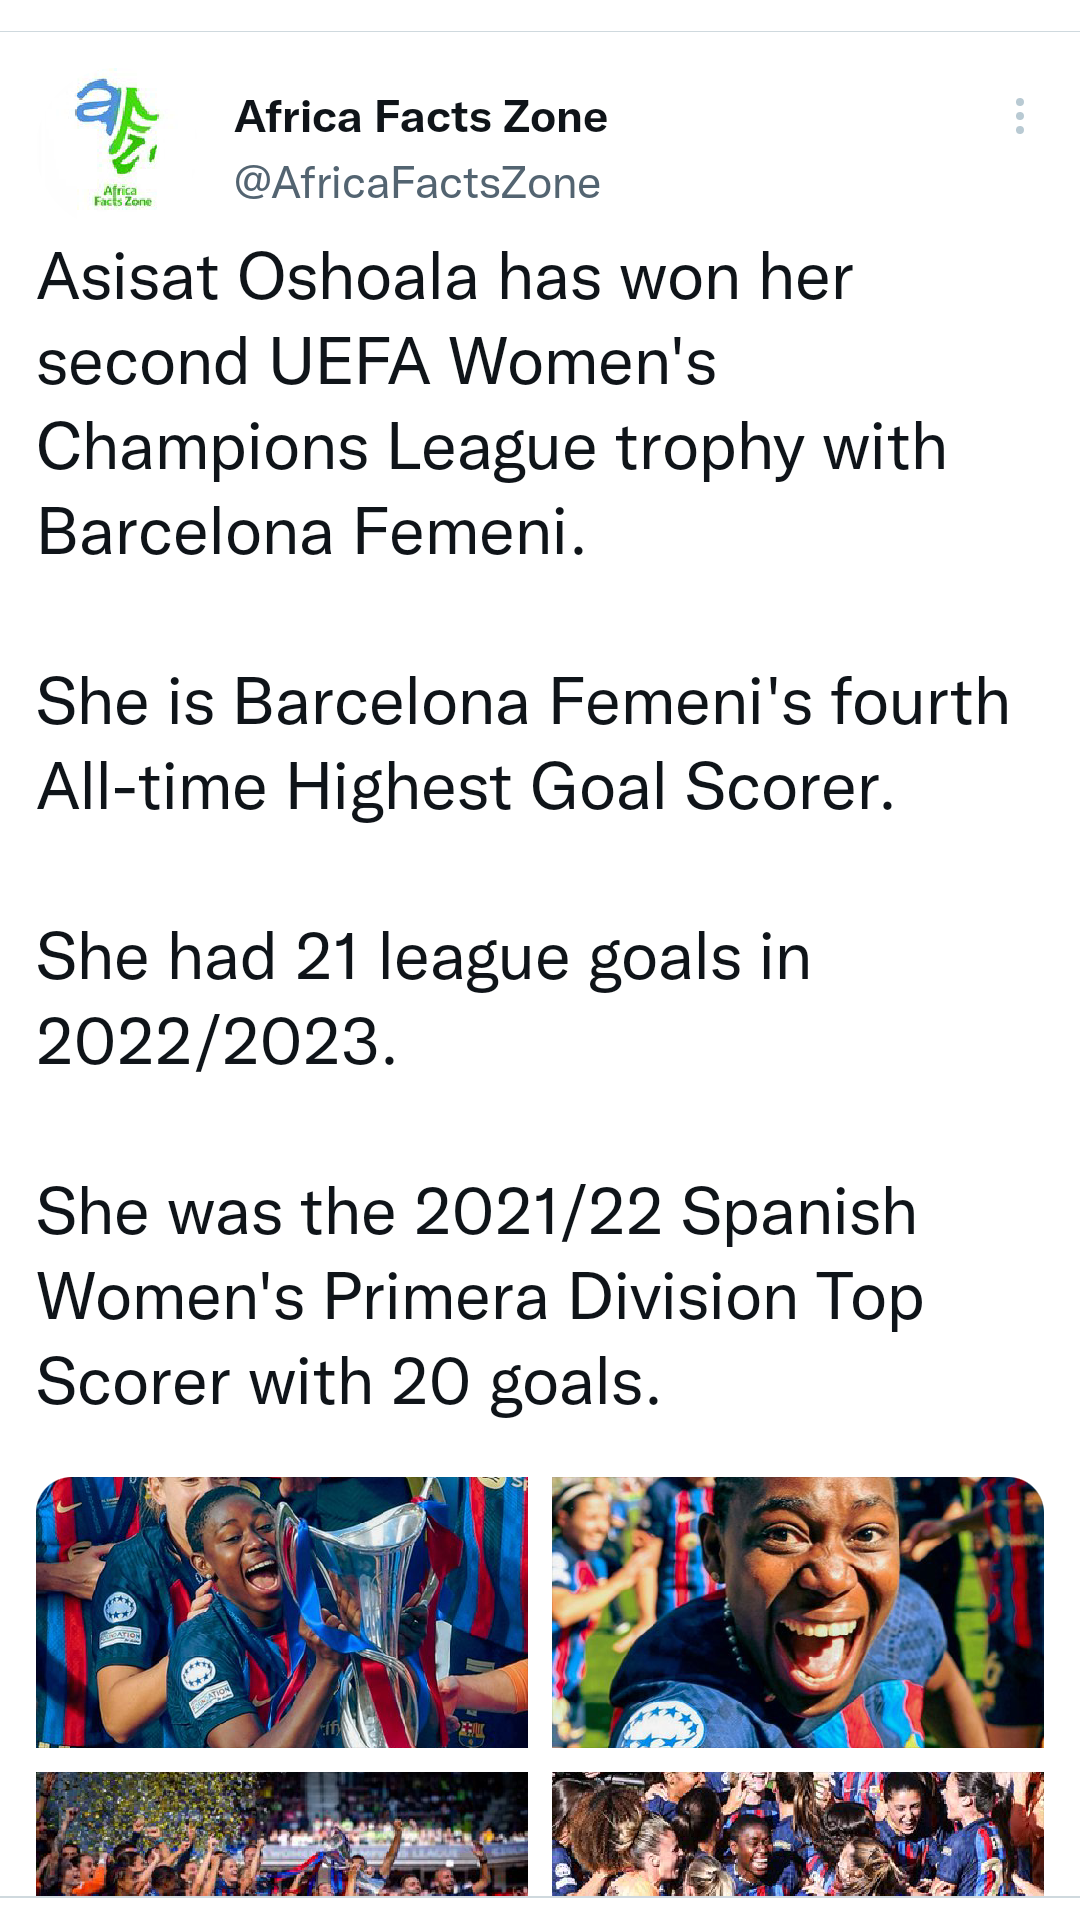 Asisat Oshoala wins second Womenâs Champions League title with Barcelona to turn out to be Africa’s most embellished footballer of all time